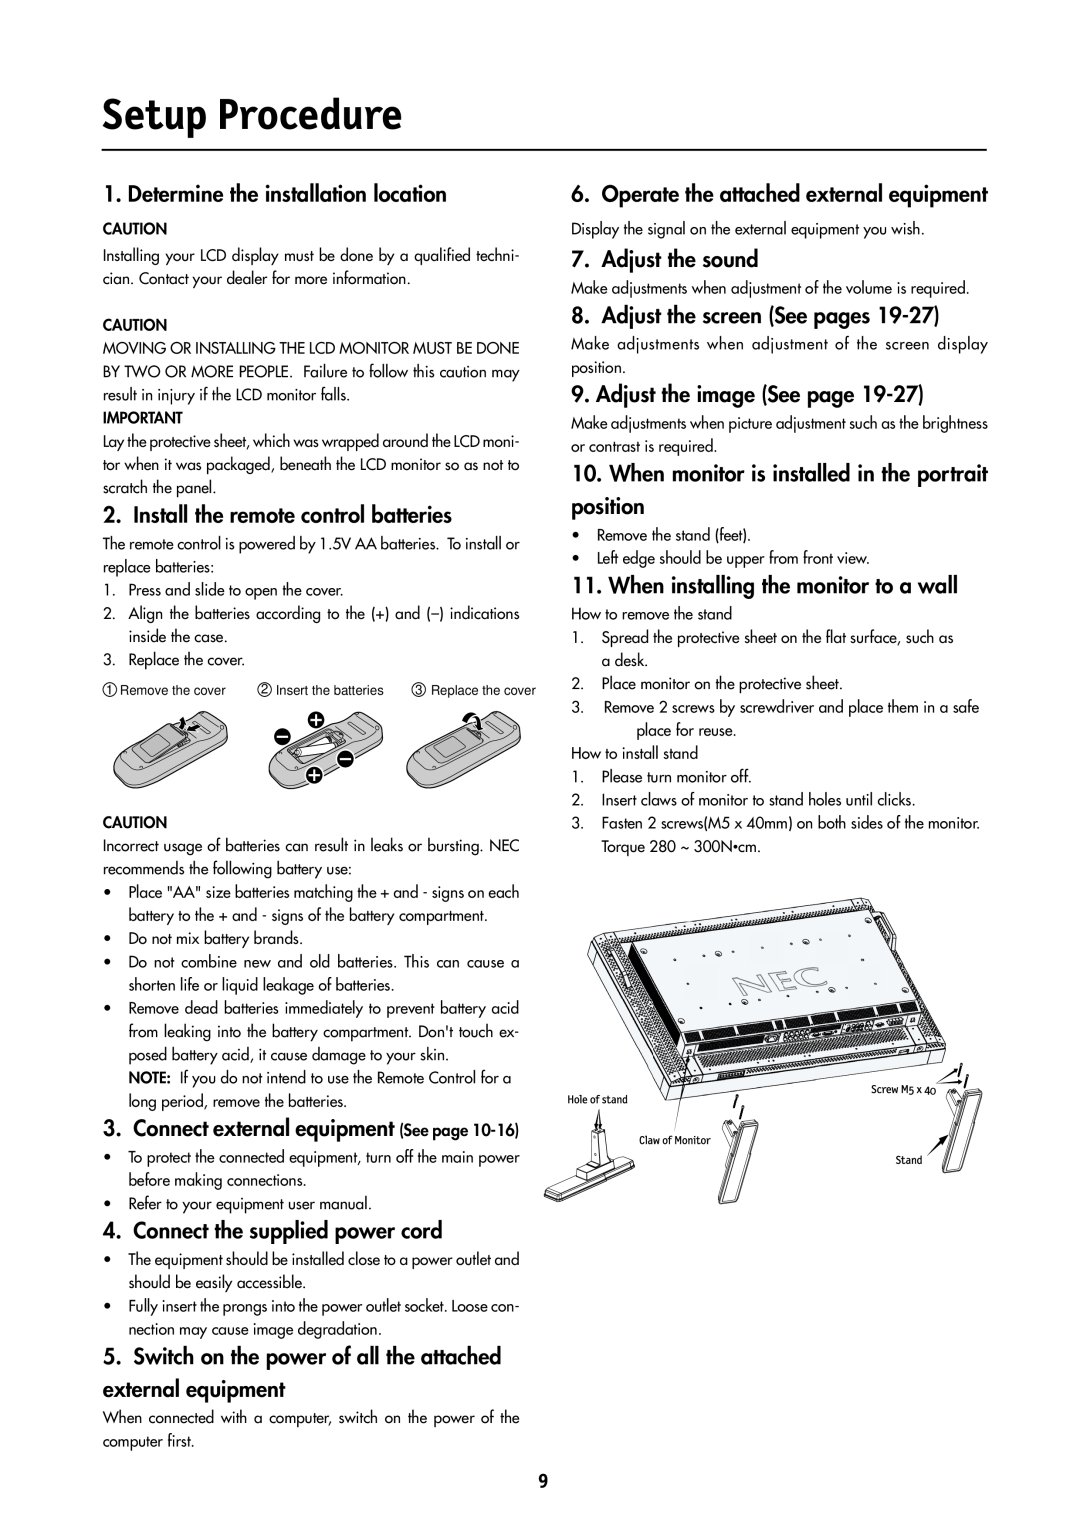 NEC LCD4000 manual Setup Procedure 